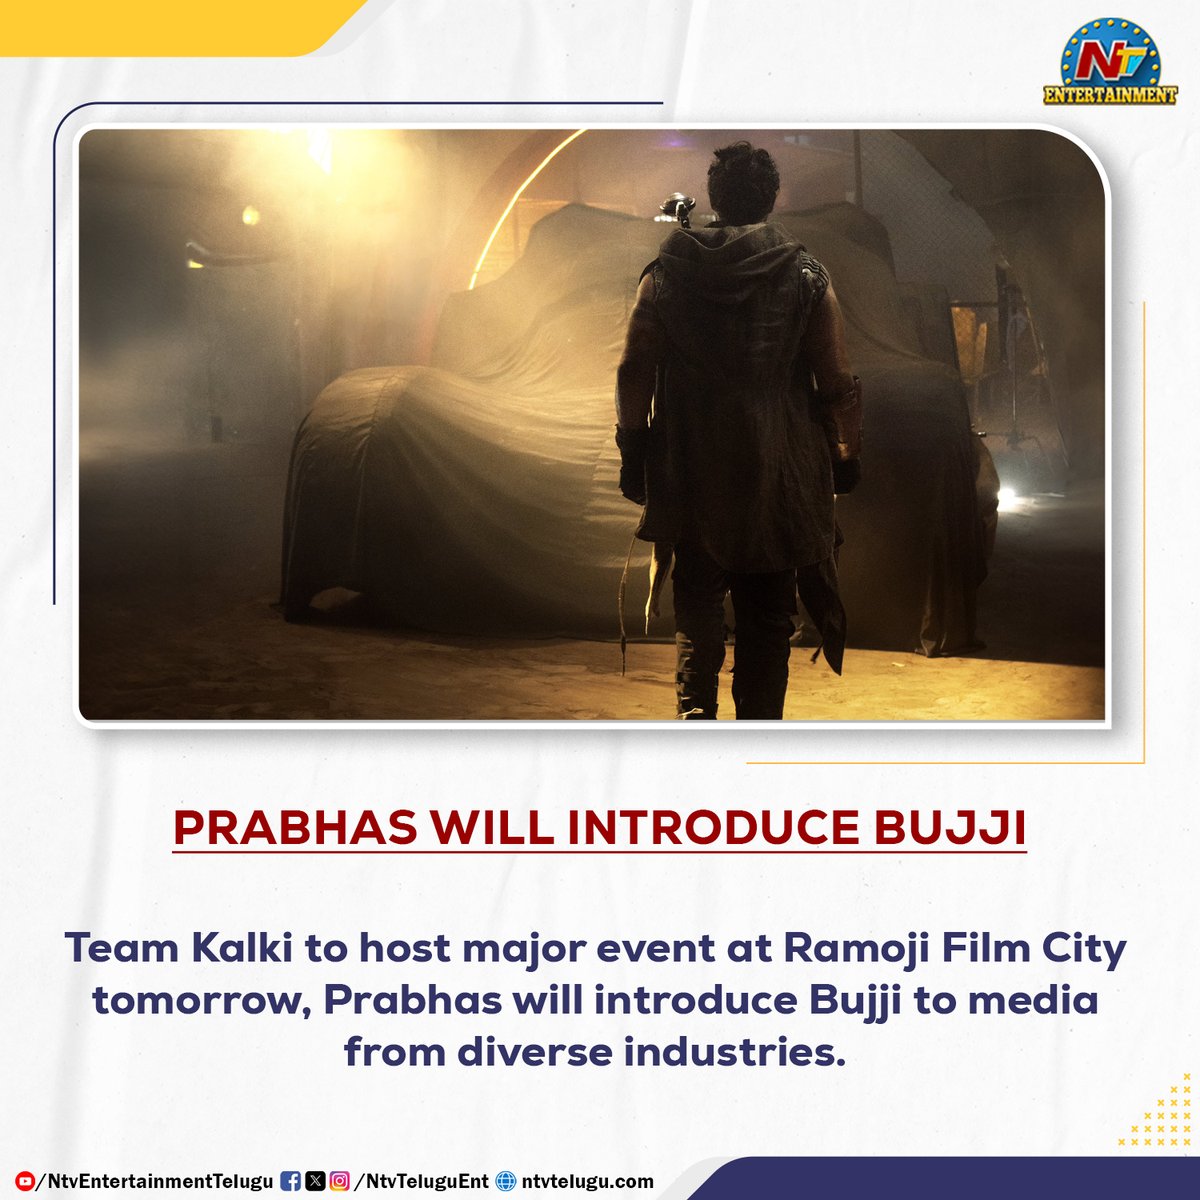 Team Kalki to host major event at Ramoji Film City tomorrow,Prabhas will introduce Bujji to media from diverse industries. #Kalki2898AD #Prabhas #Bujji #AmitabhBachchan #DeepikaPadukone #Kalki2898ADonJune27 #NTVENT